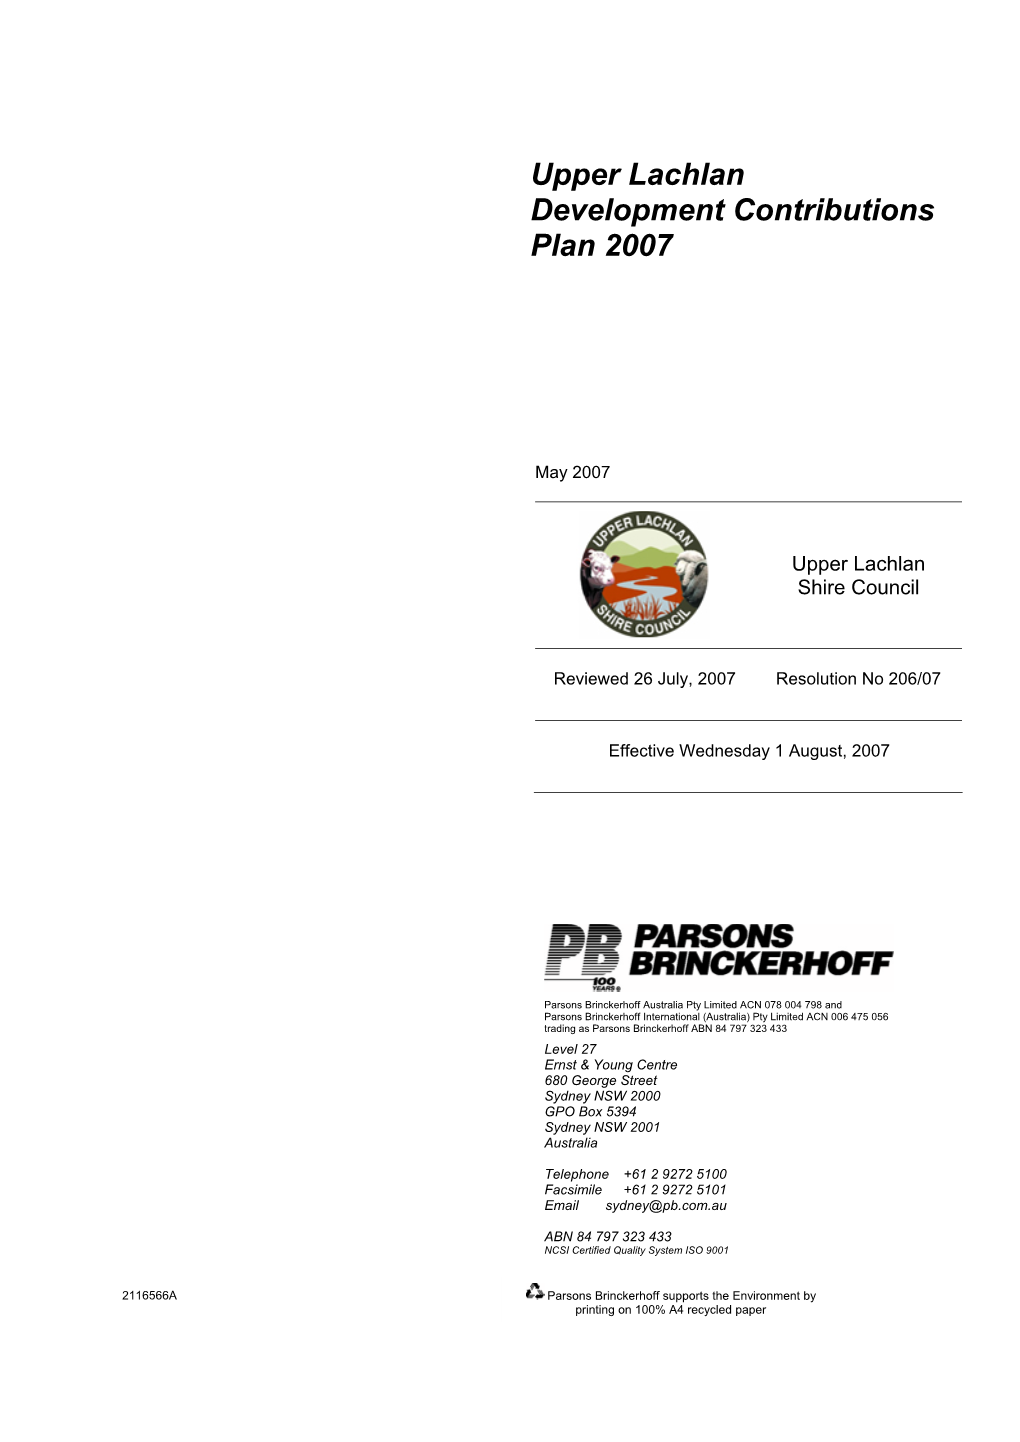 Upper Lachlan Development Contributions Plan 2007